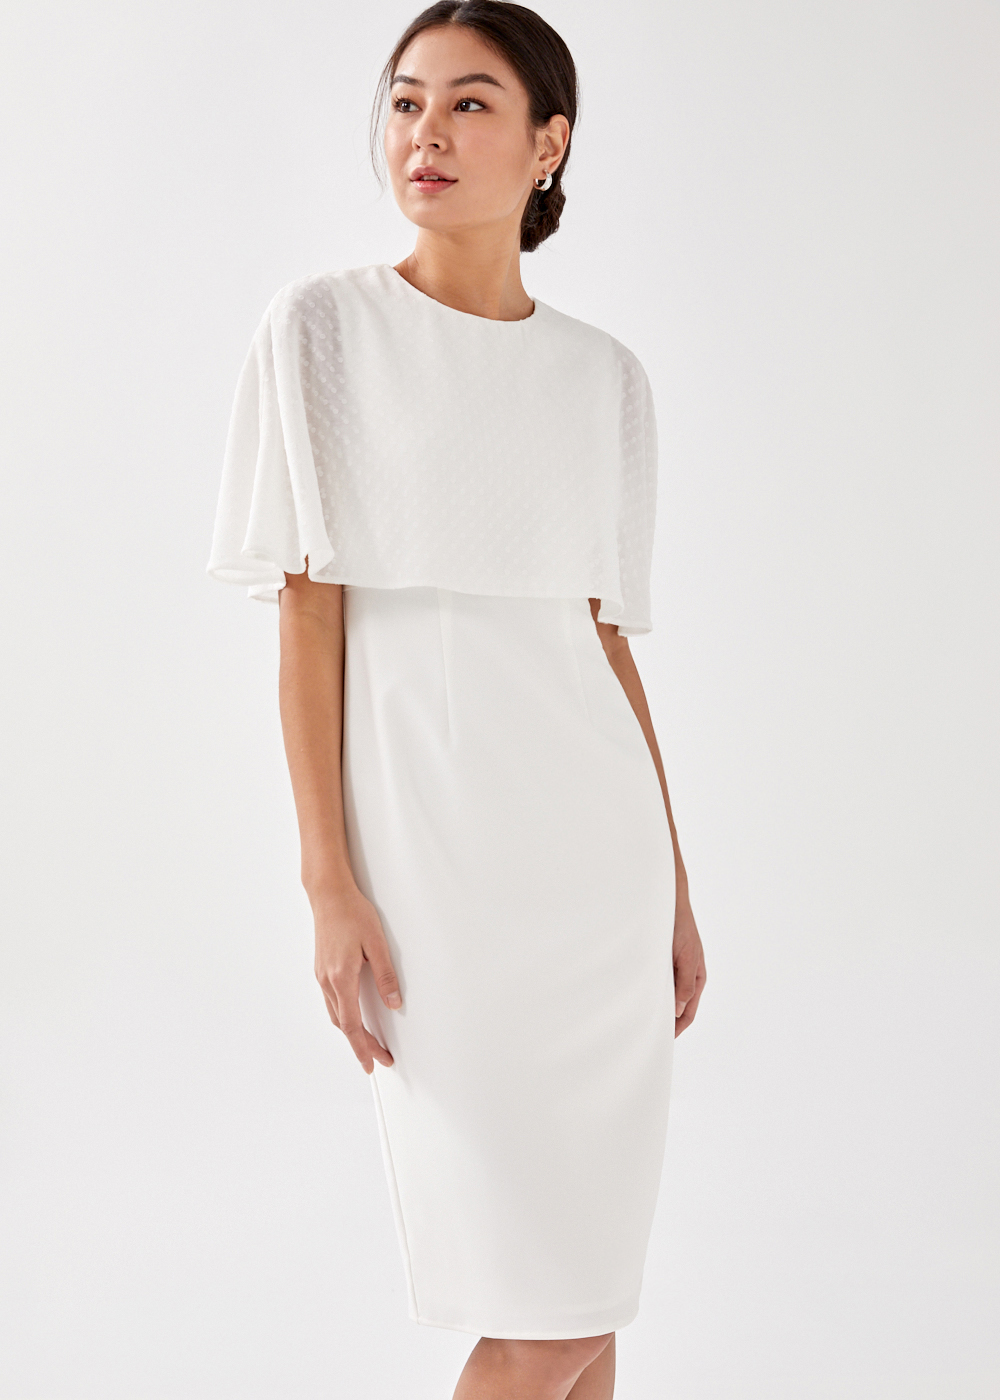 Buy Tabitha Cape Overlay Dress @ Love, Bonito Singapore | Shop Women's ...